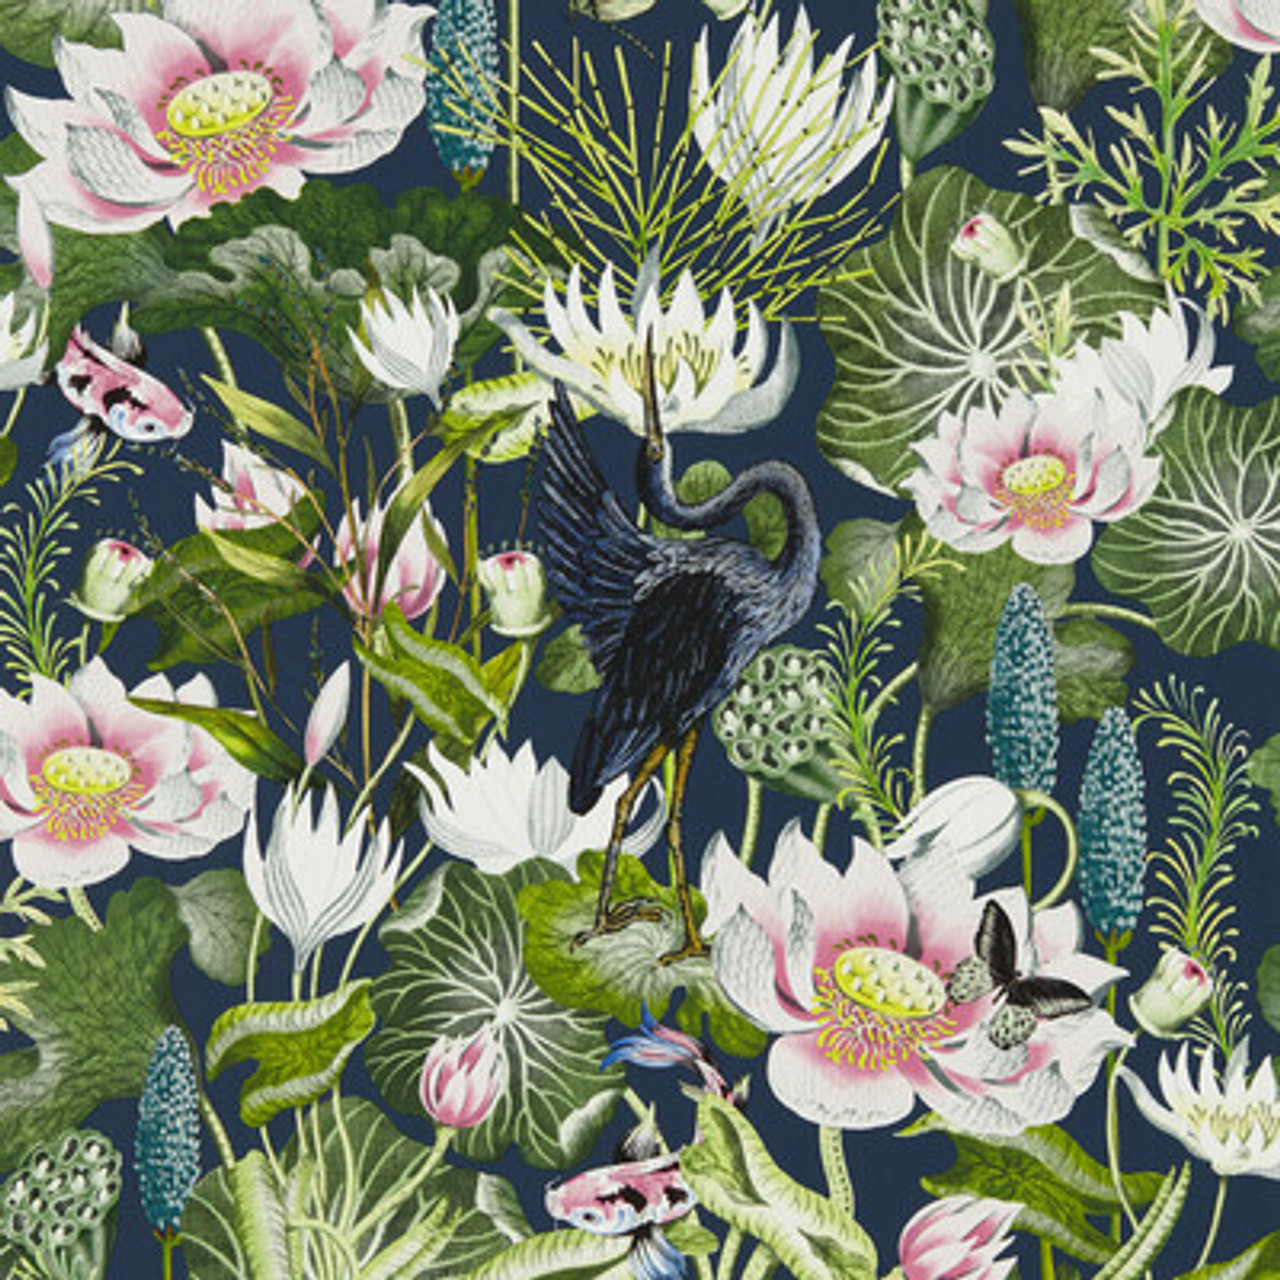 Midnight Botanica Design Printed Fabric